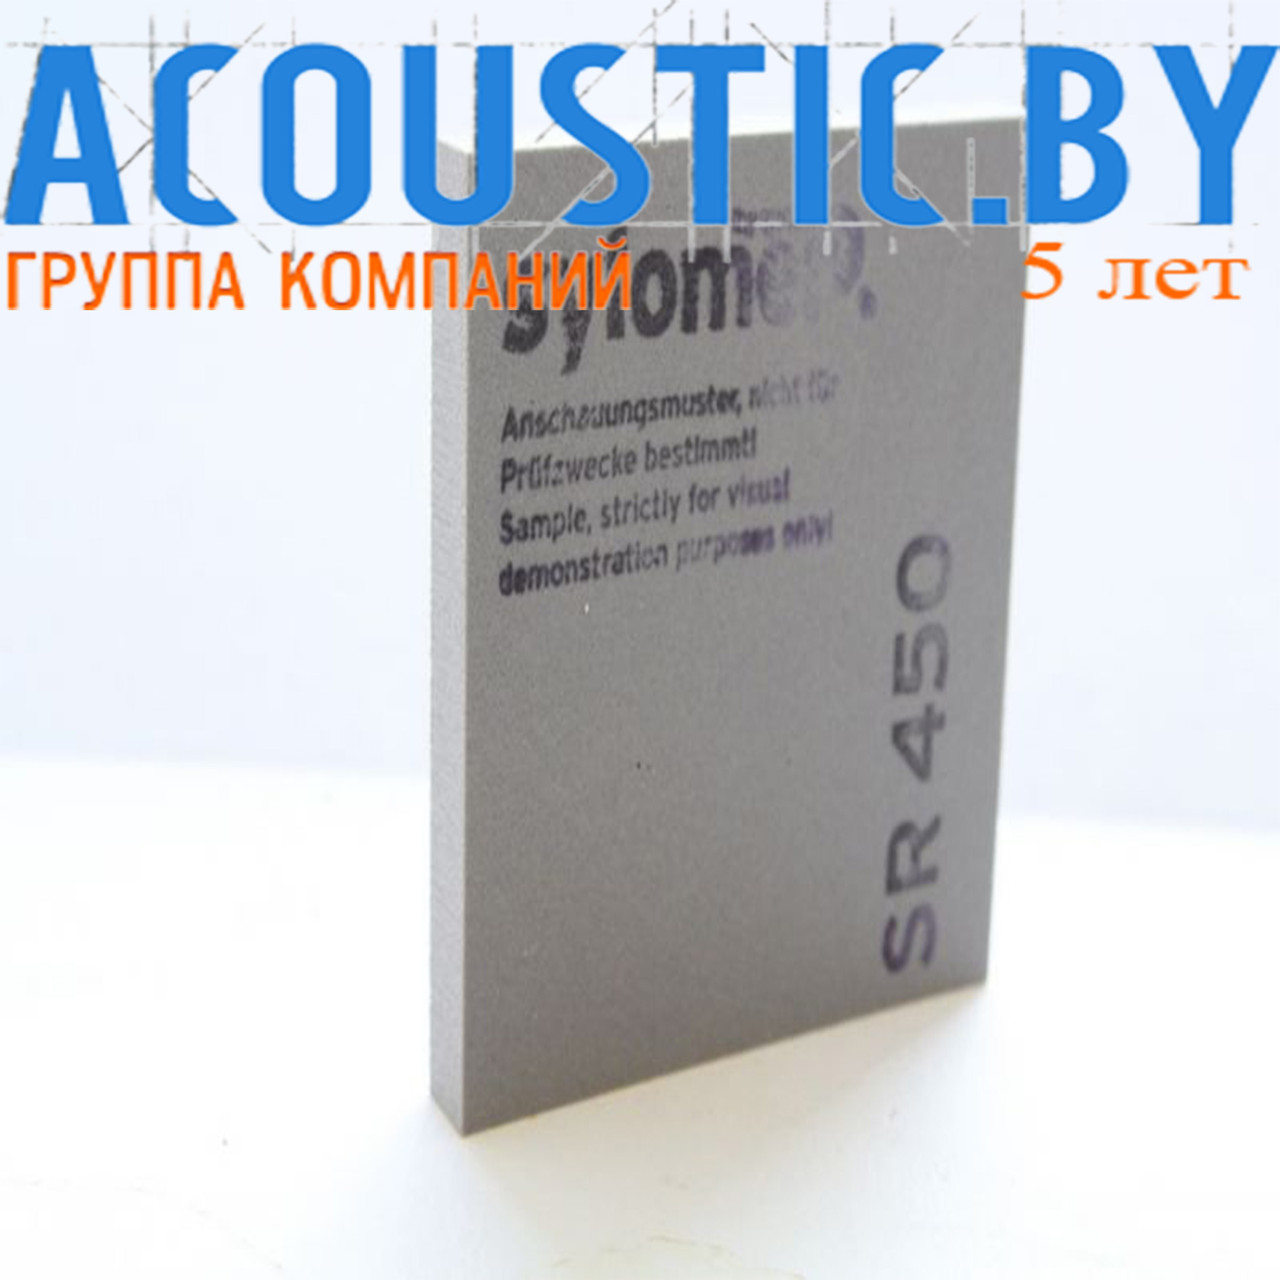 Эластомер виброизолирующий Sylomer SR 450, 12,5 мм.  Звукоизоляция, шумоизоляция, виброизоляция.